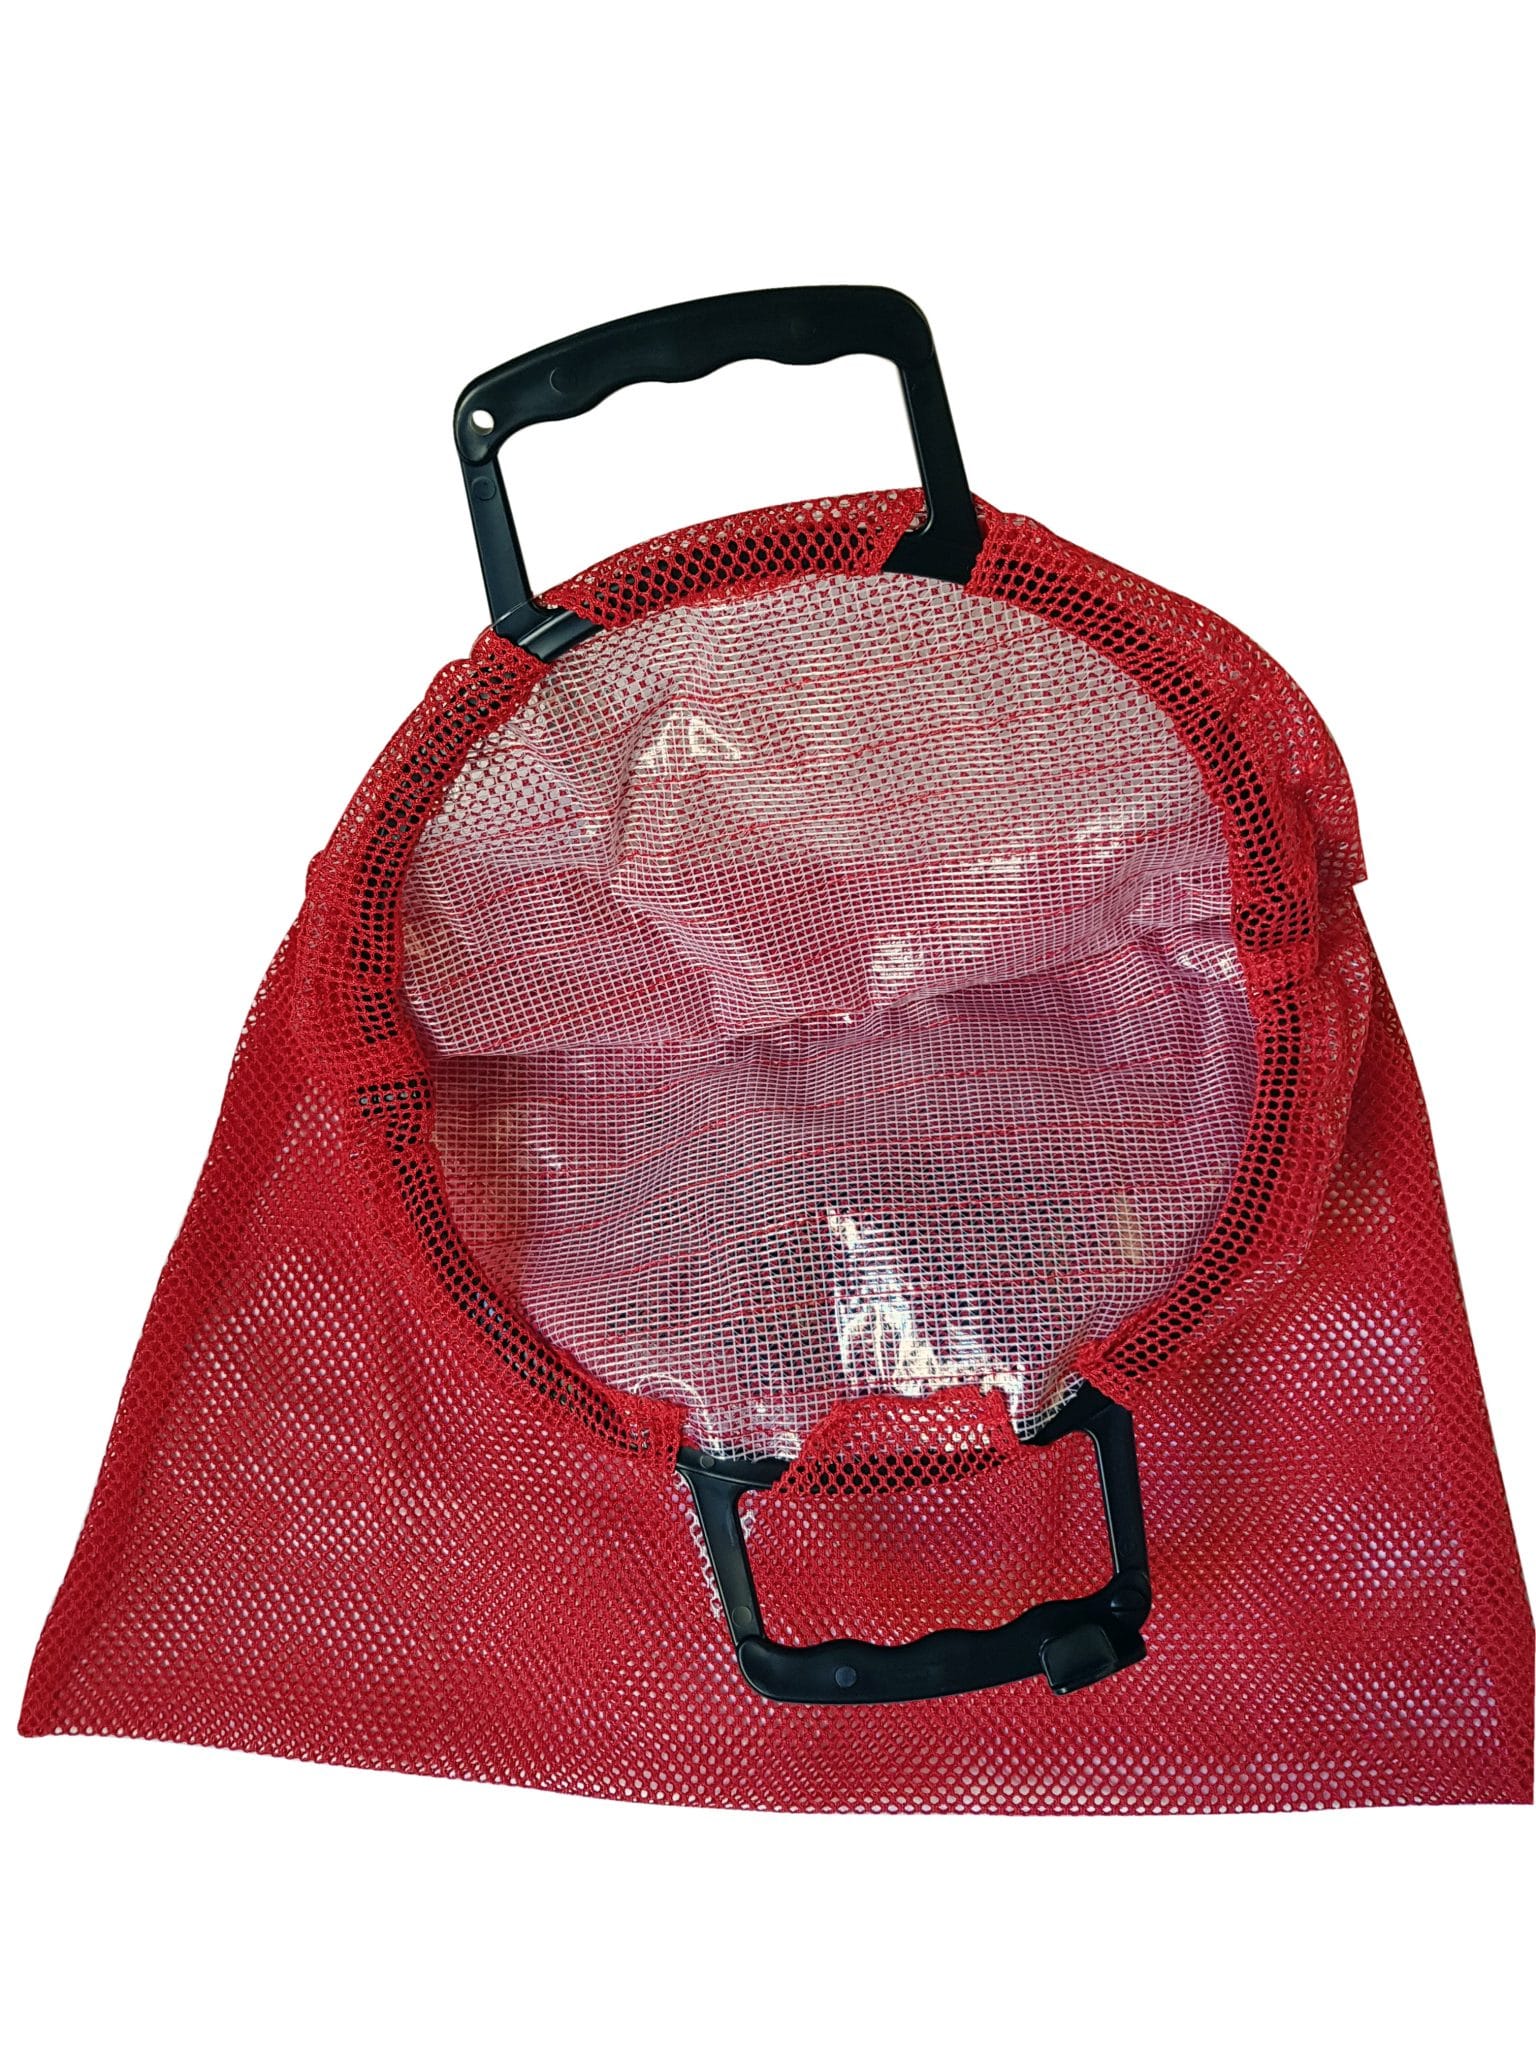 Imersion Red Net Bag - Start Point Spearfishing